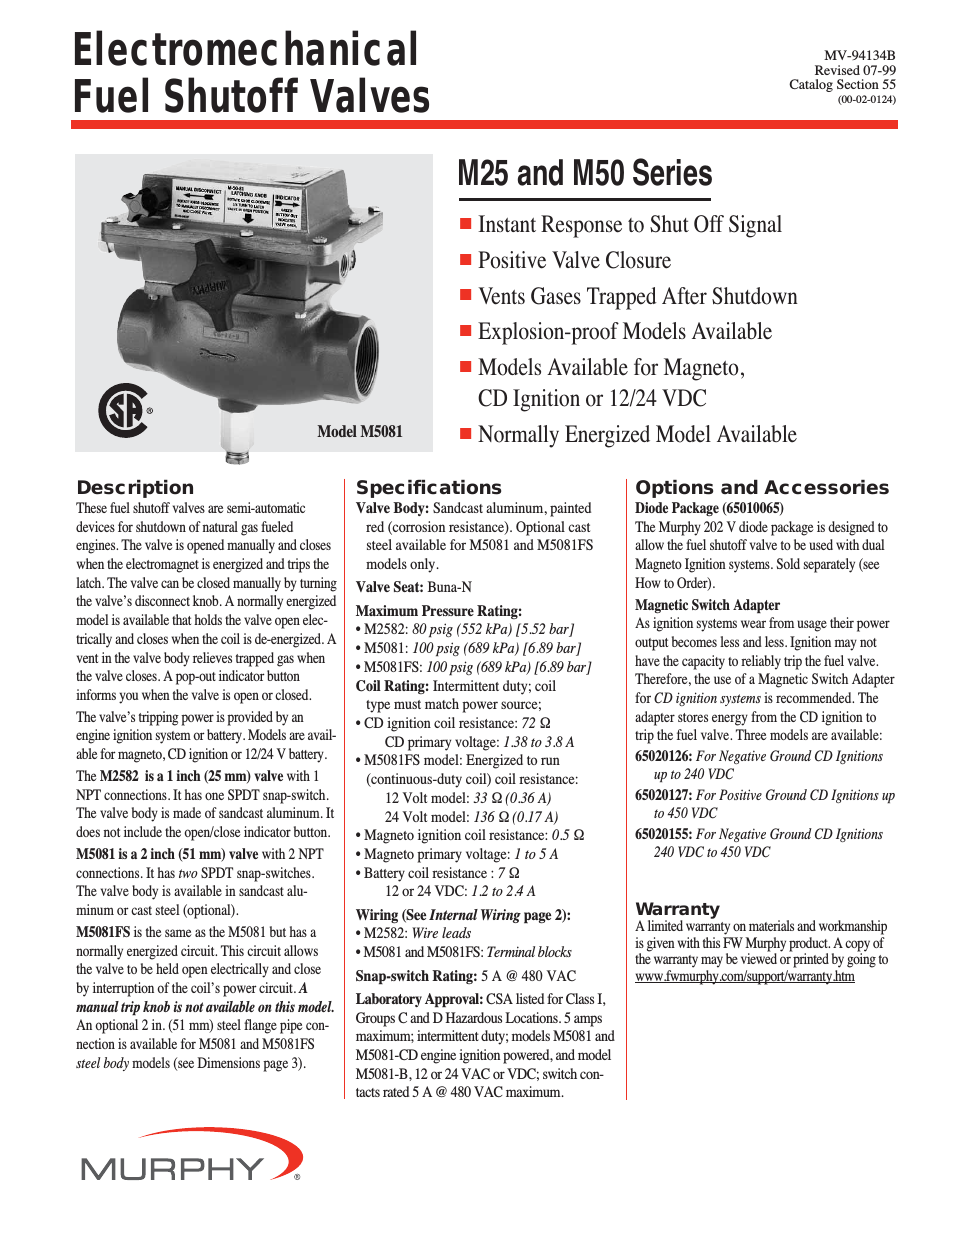 Electromechanical Fuel Shutoff Valves M50